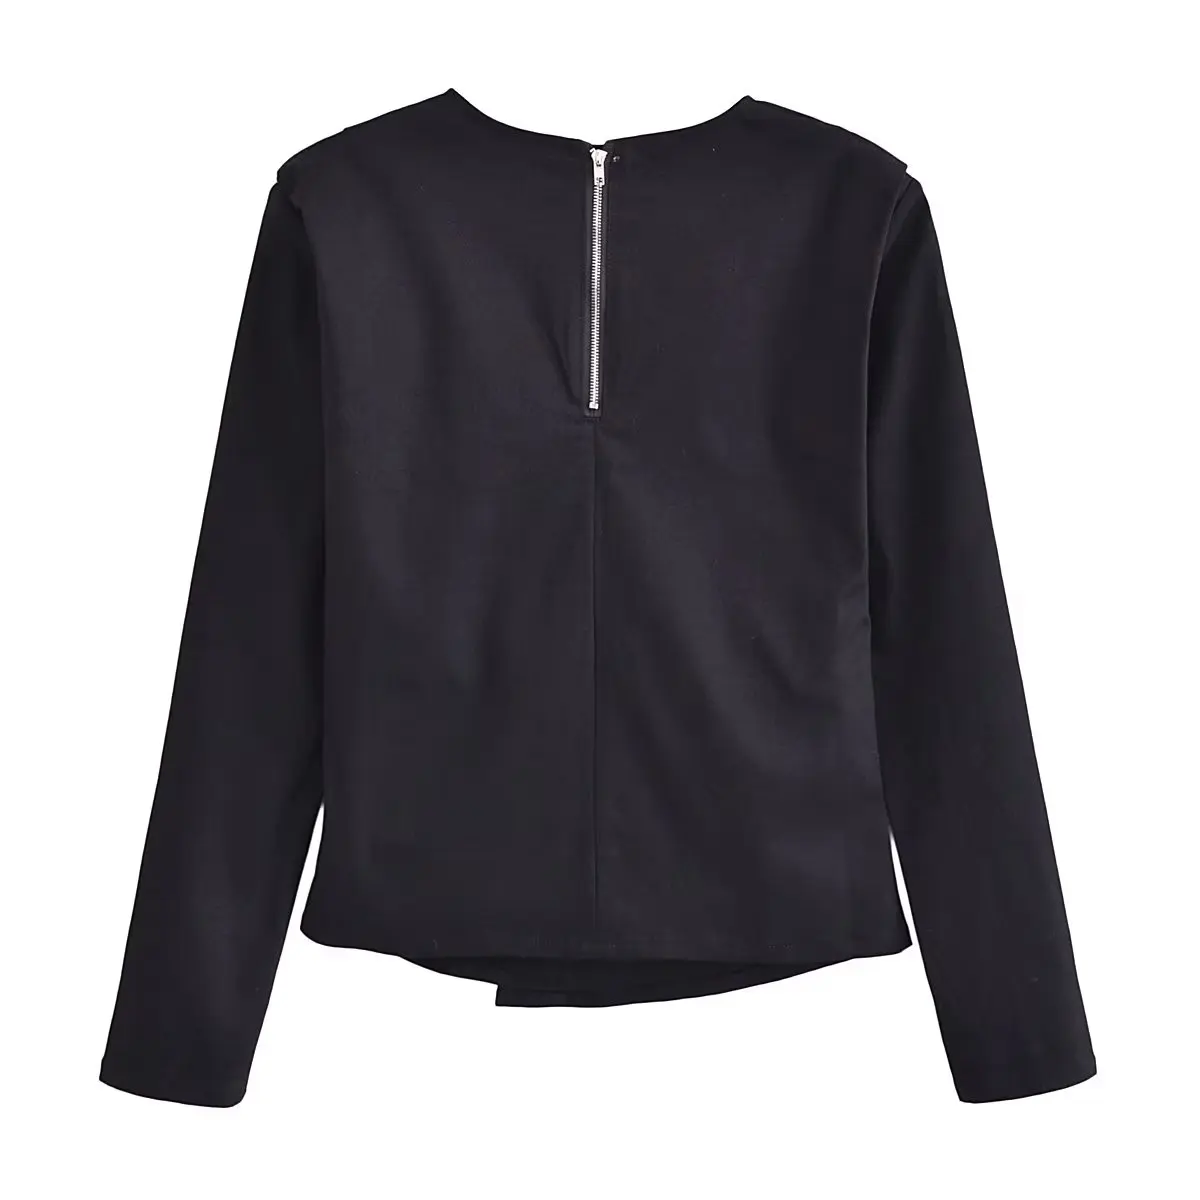 Jenny&Dave Casual And Elegant Black Shirt Autumn Blouse Women Tops French Women's Retro Patchwork Design Shirt